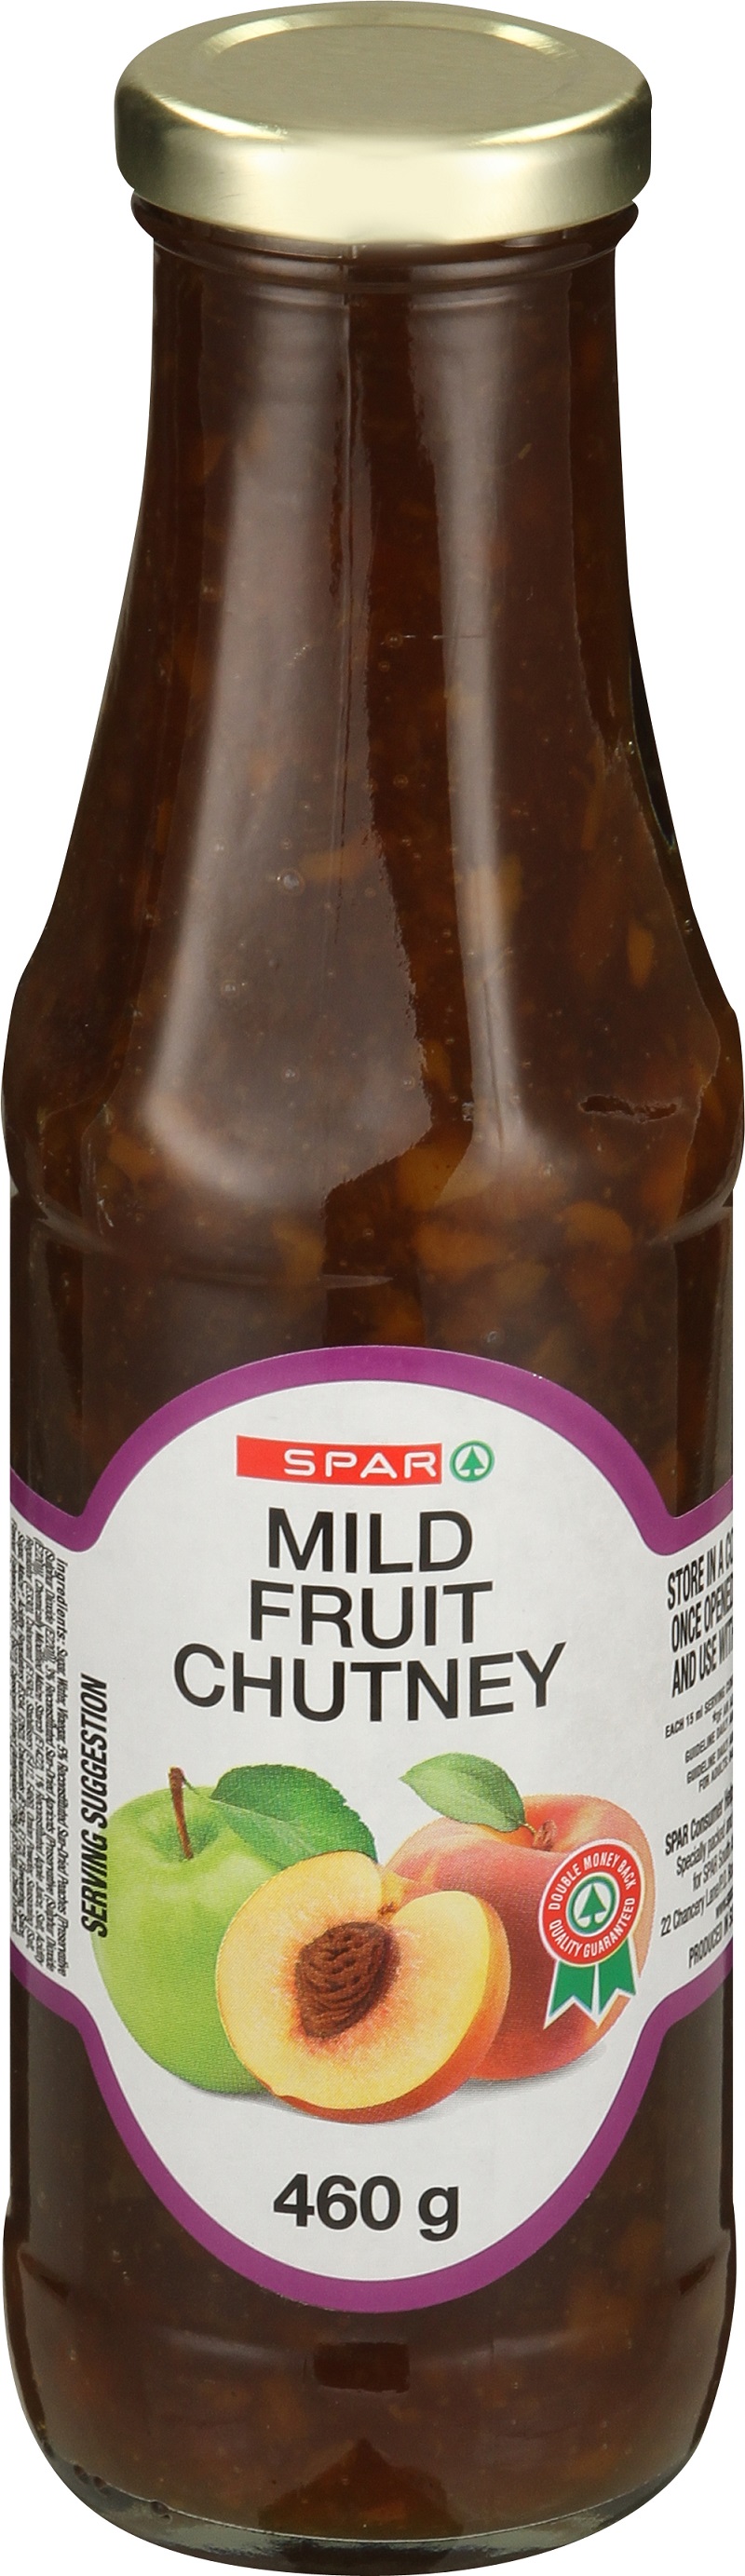 fruit chutney mild